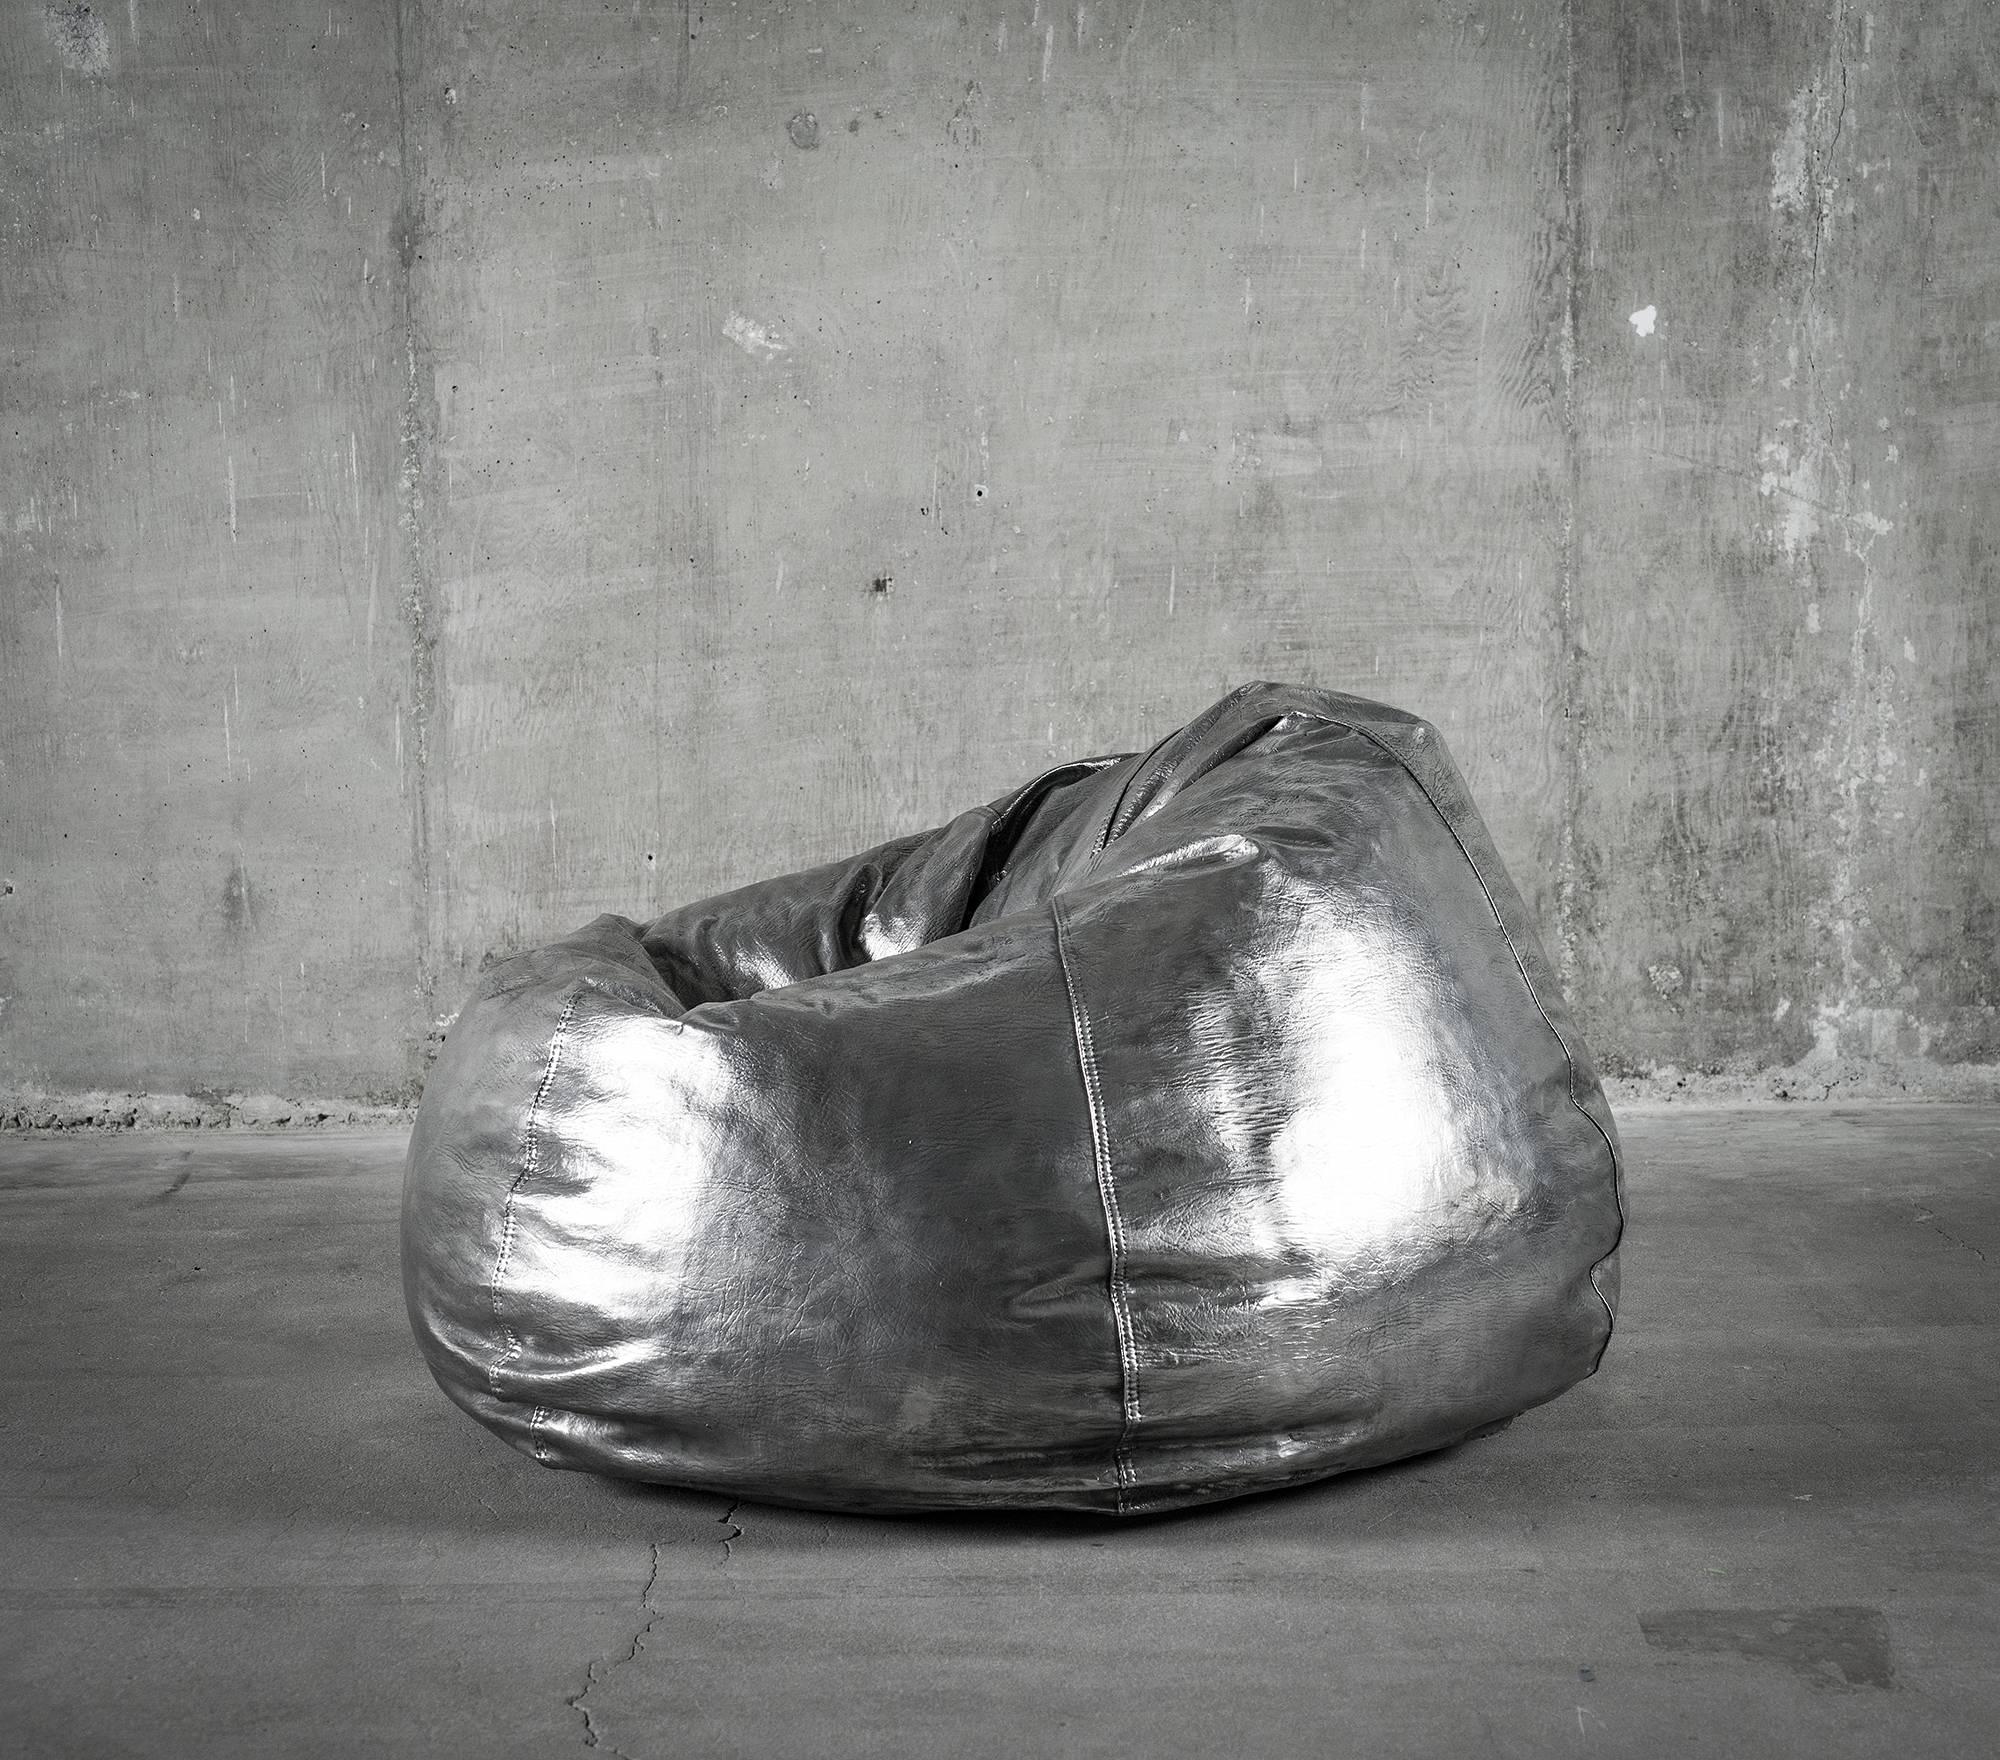 Stainless Steel Stainless steel beanbag chair sculpture by Cheryl Ekstrom